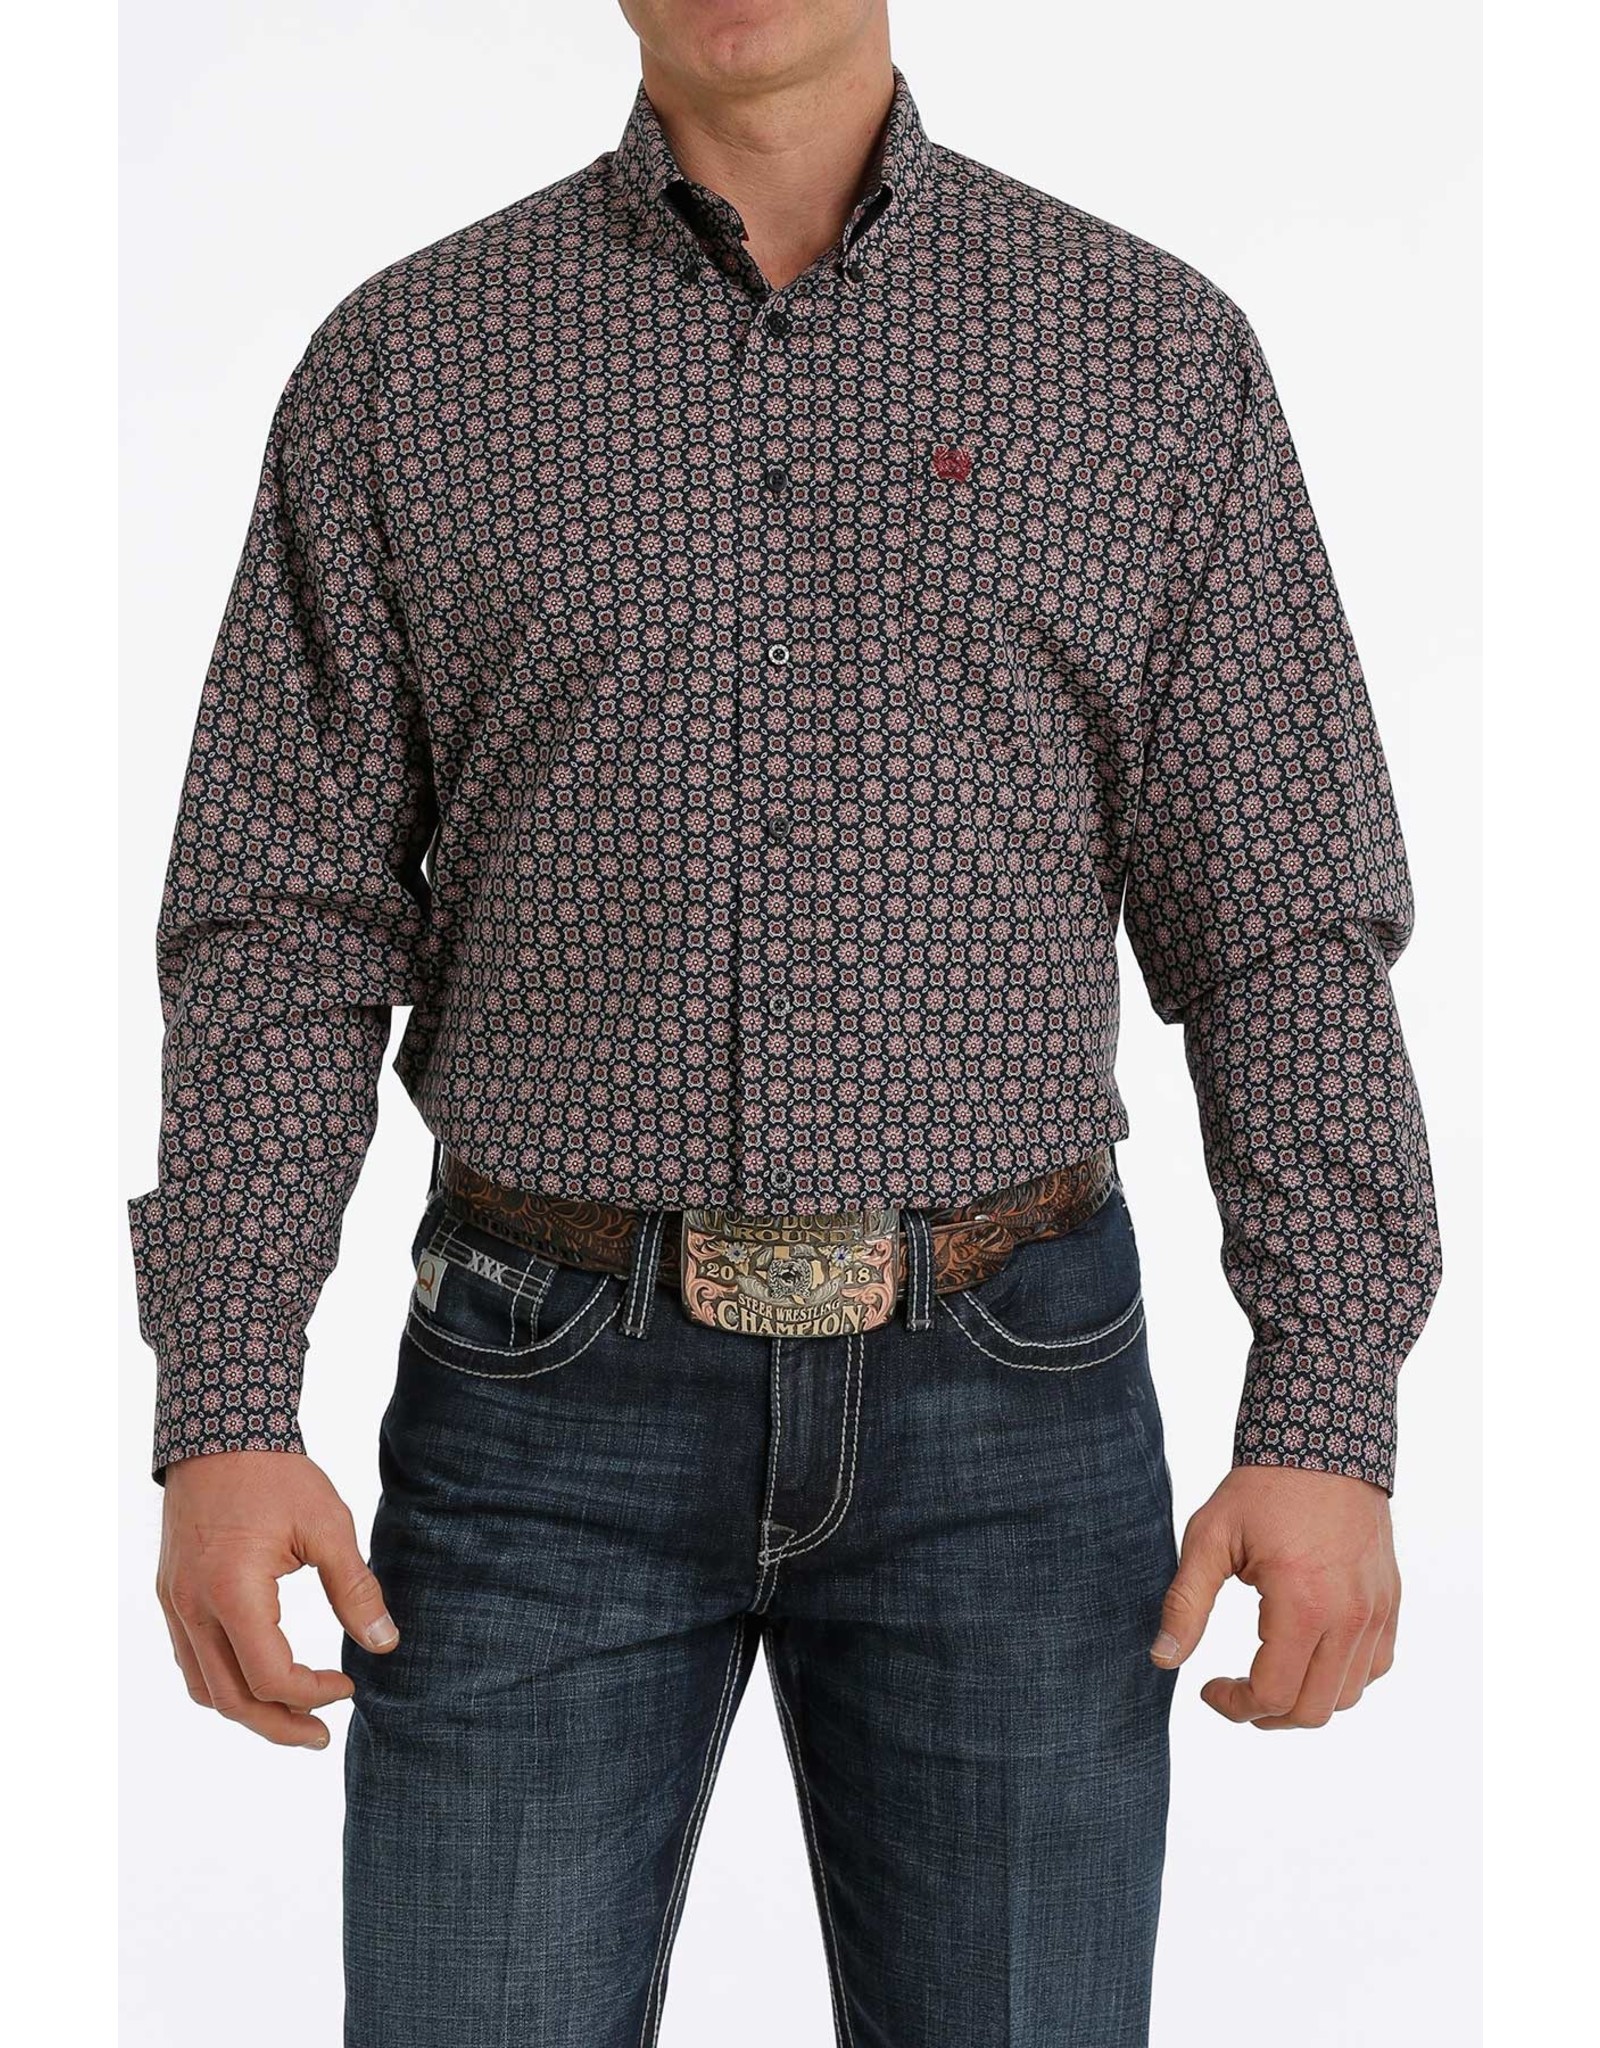 Cinch Men's Red Geo Print Long Sleeve Shirt MTW1105317